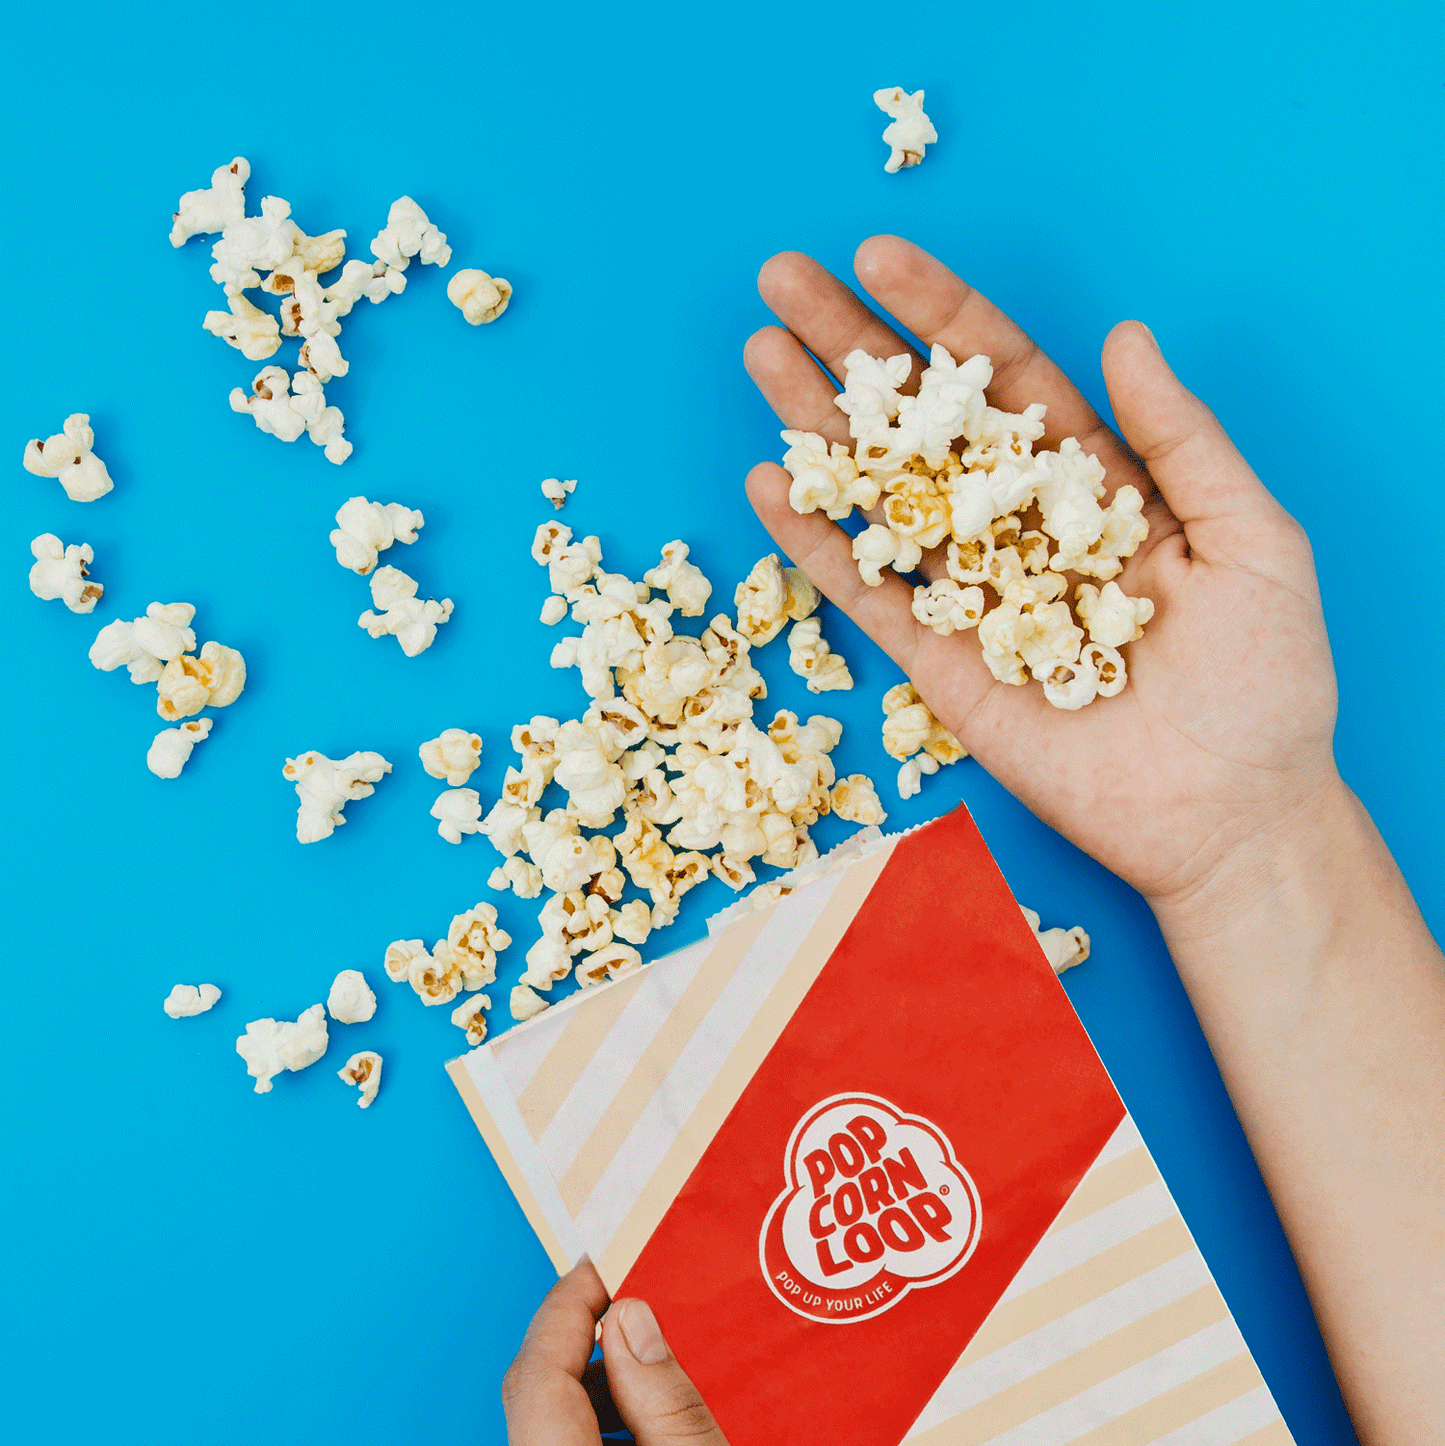 Original S popcorn bags | 100 pcs